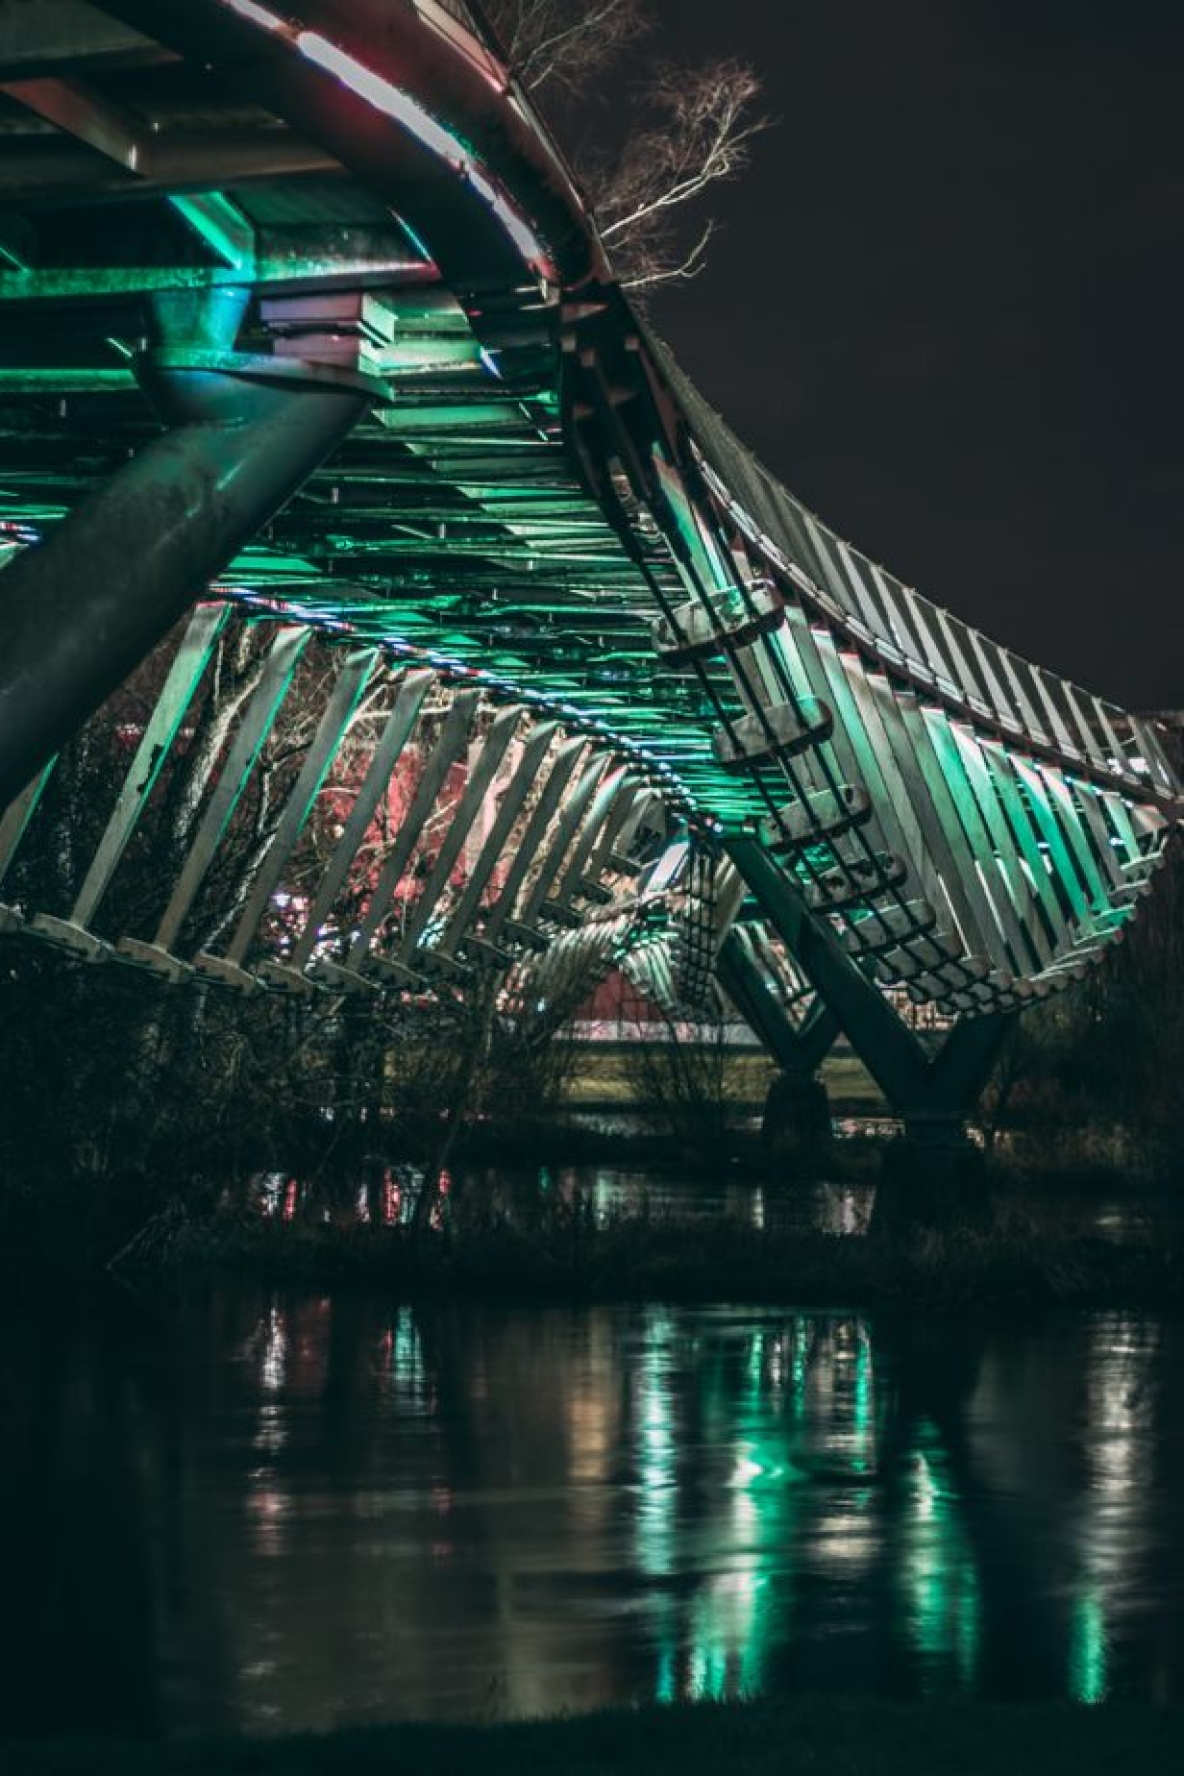 The living bridge lit up at night